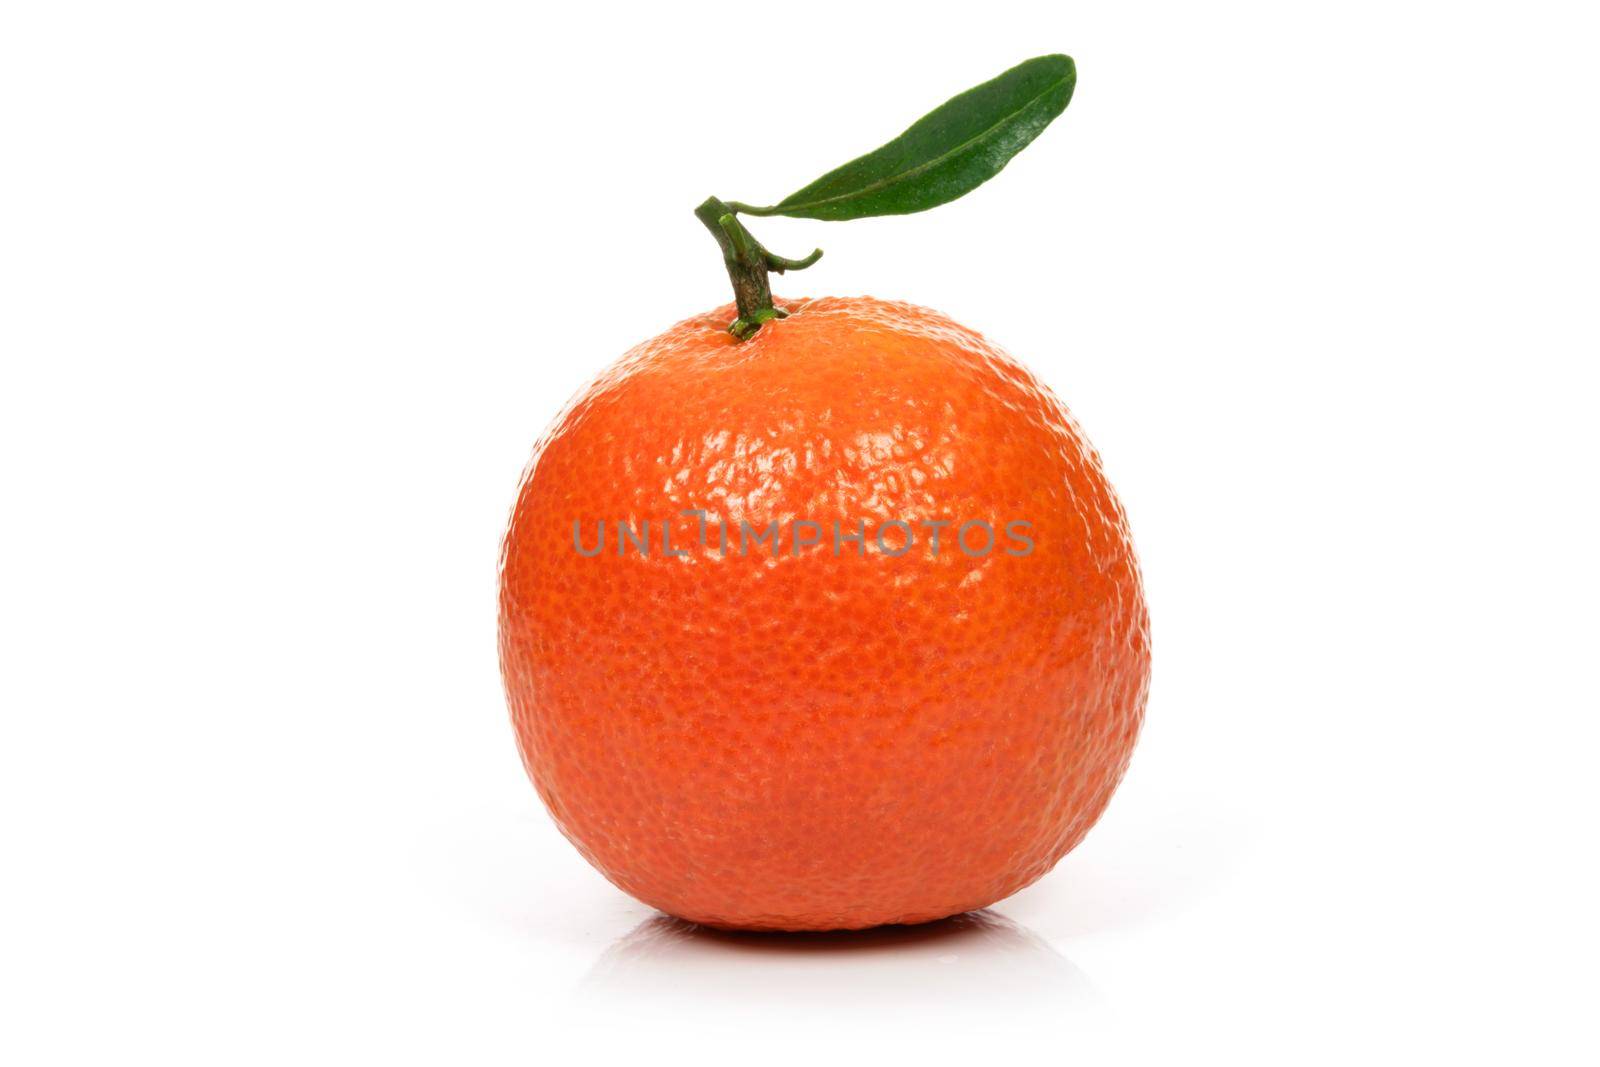 Fresh single orange fruit by wdnet_studio